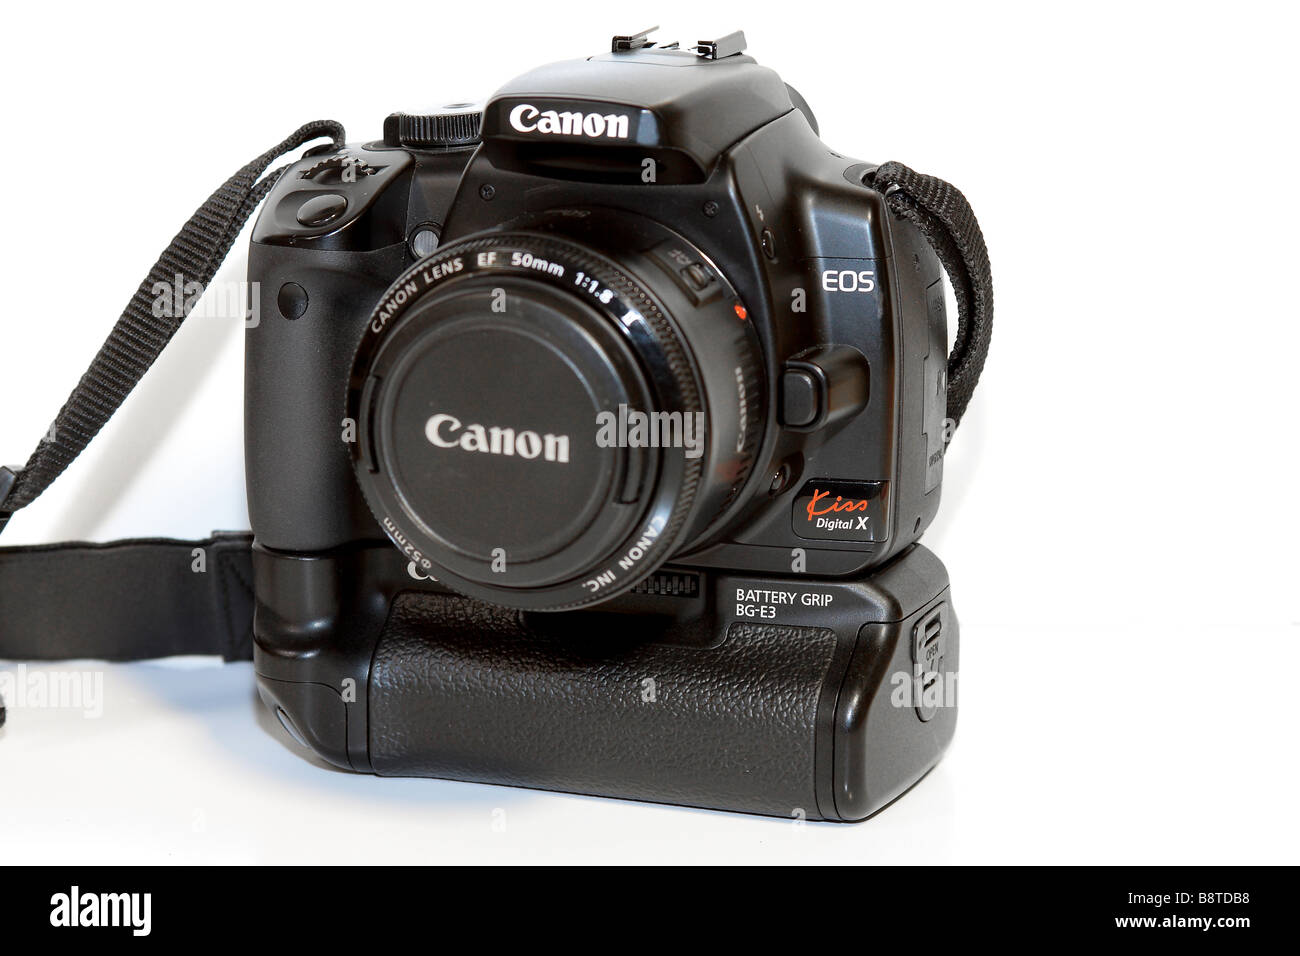 Canon Camera Kiss X, BG-E3 Battery grip, 50mm lens "Front View Stock Photo  - Alamy